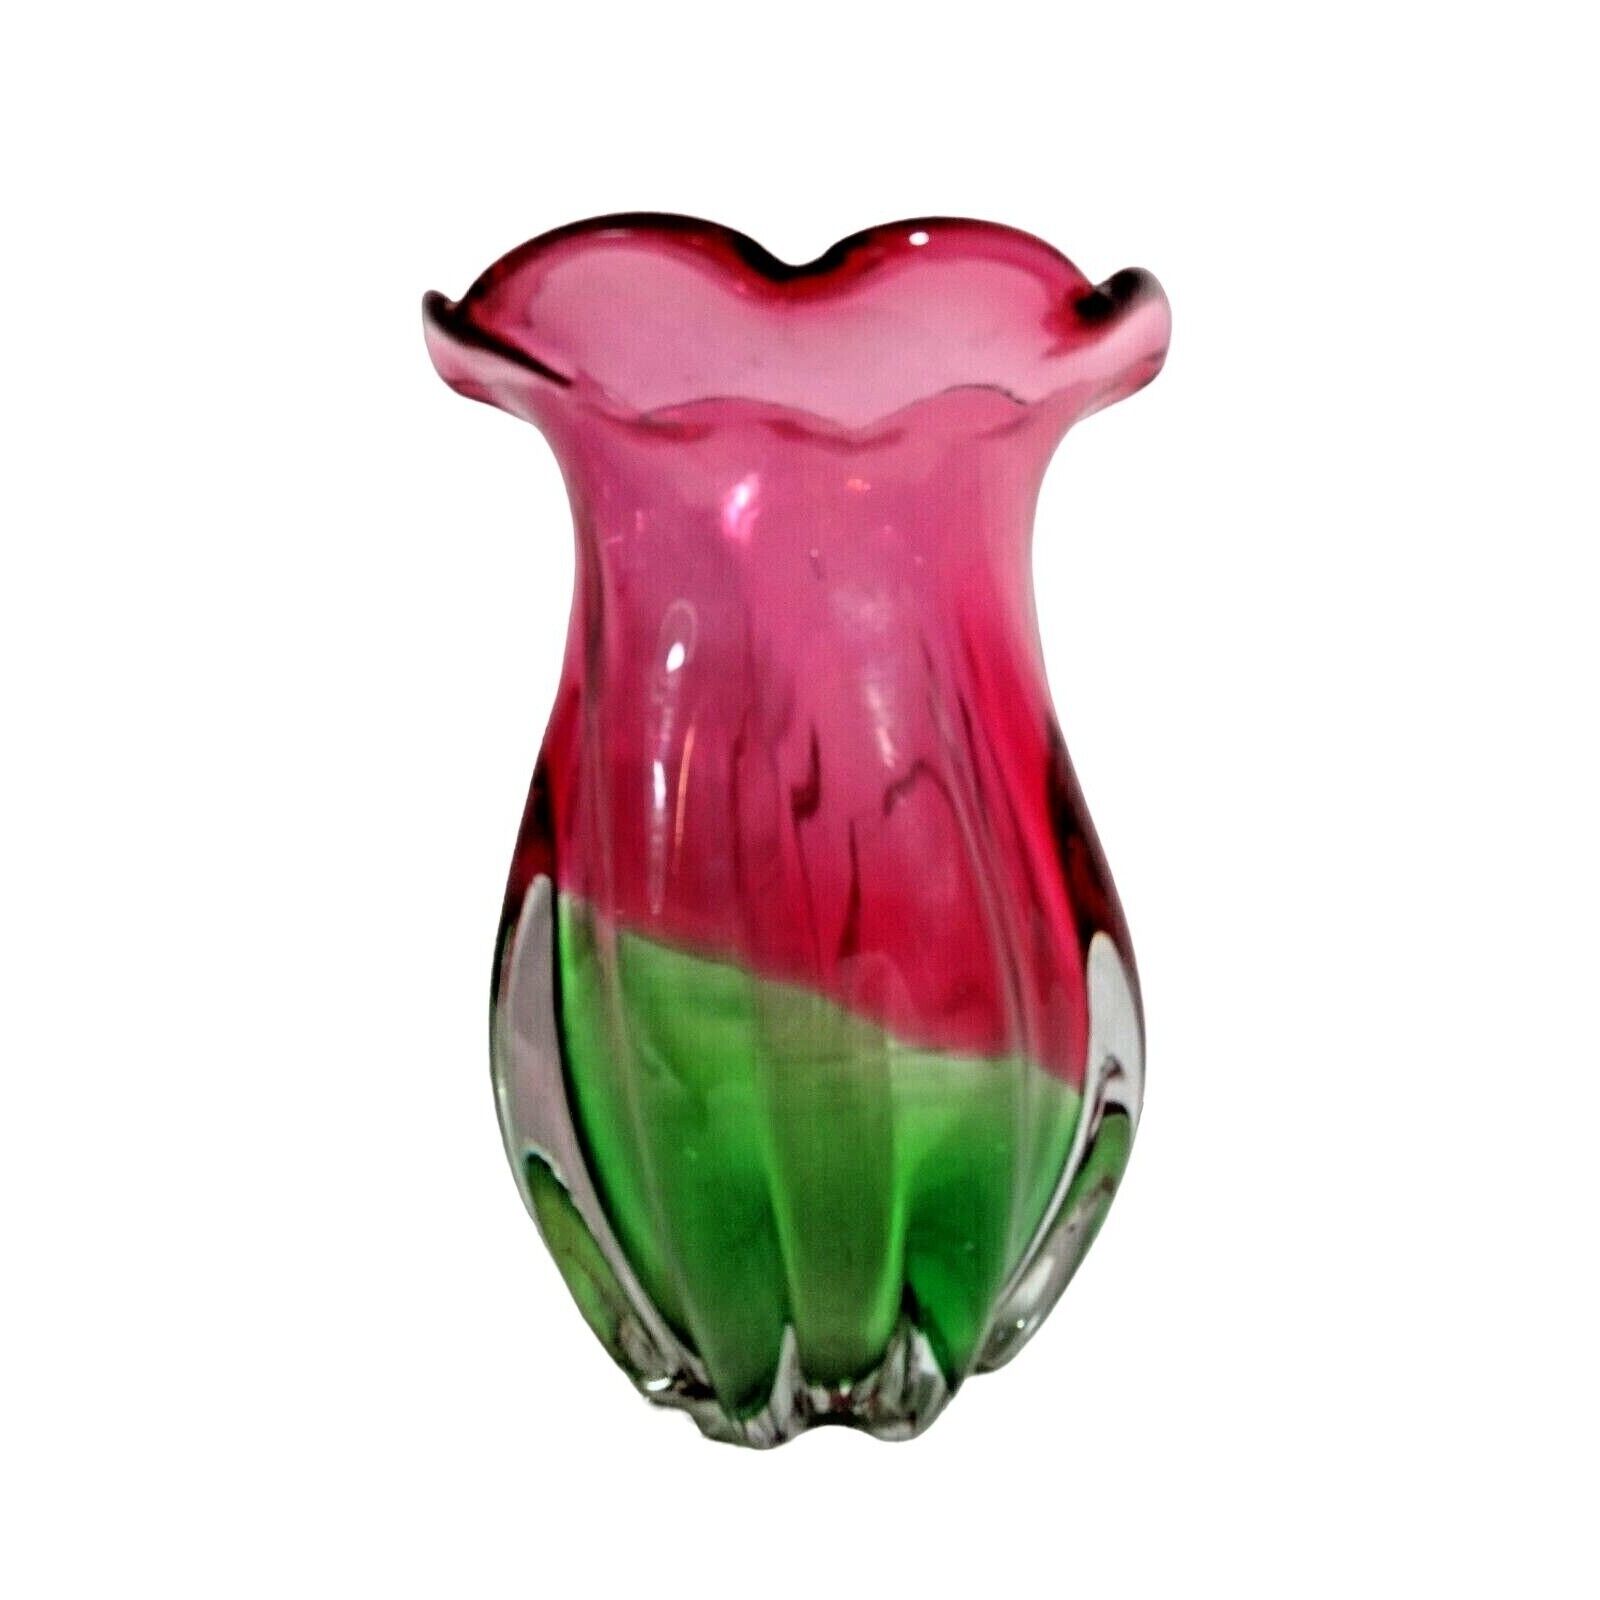 Teleflora Vase Trumpet Floral Glass Watermelon Green Cranberry Pink Swirl 7 inch